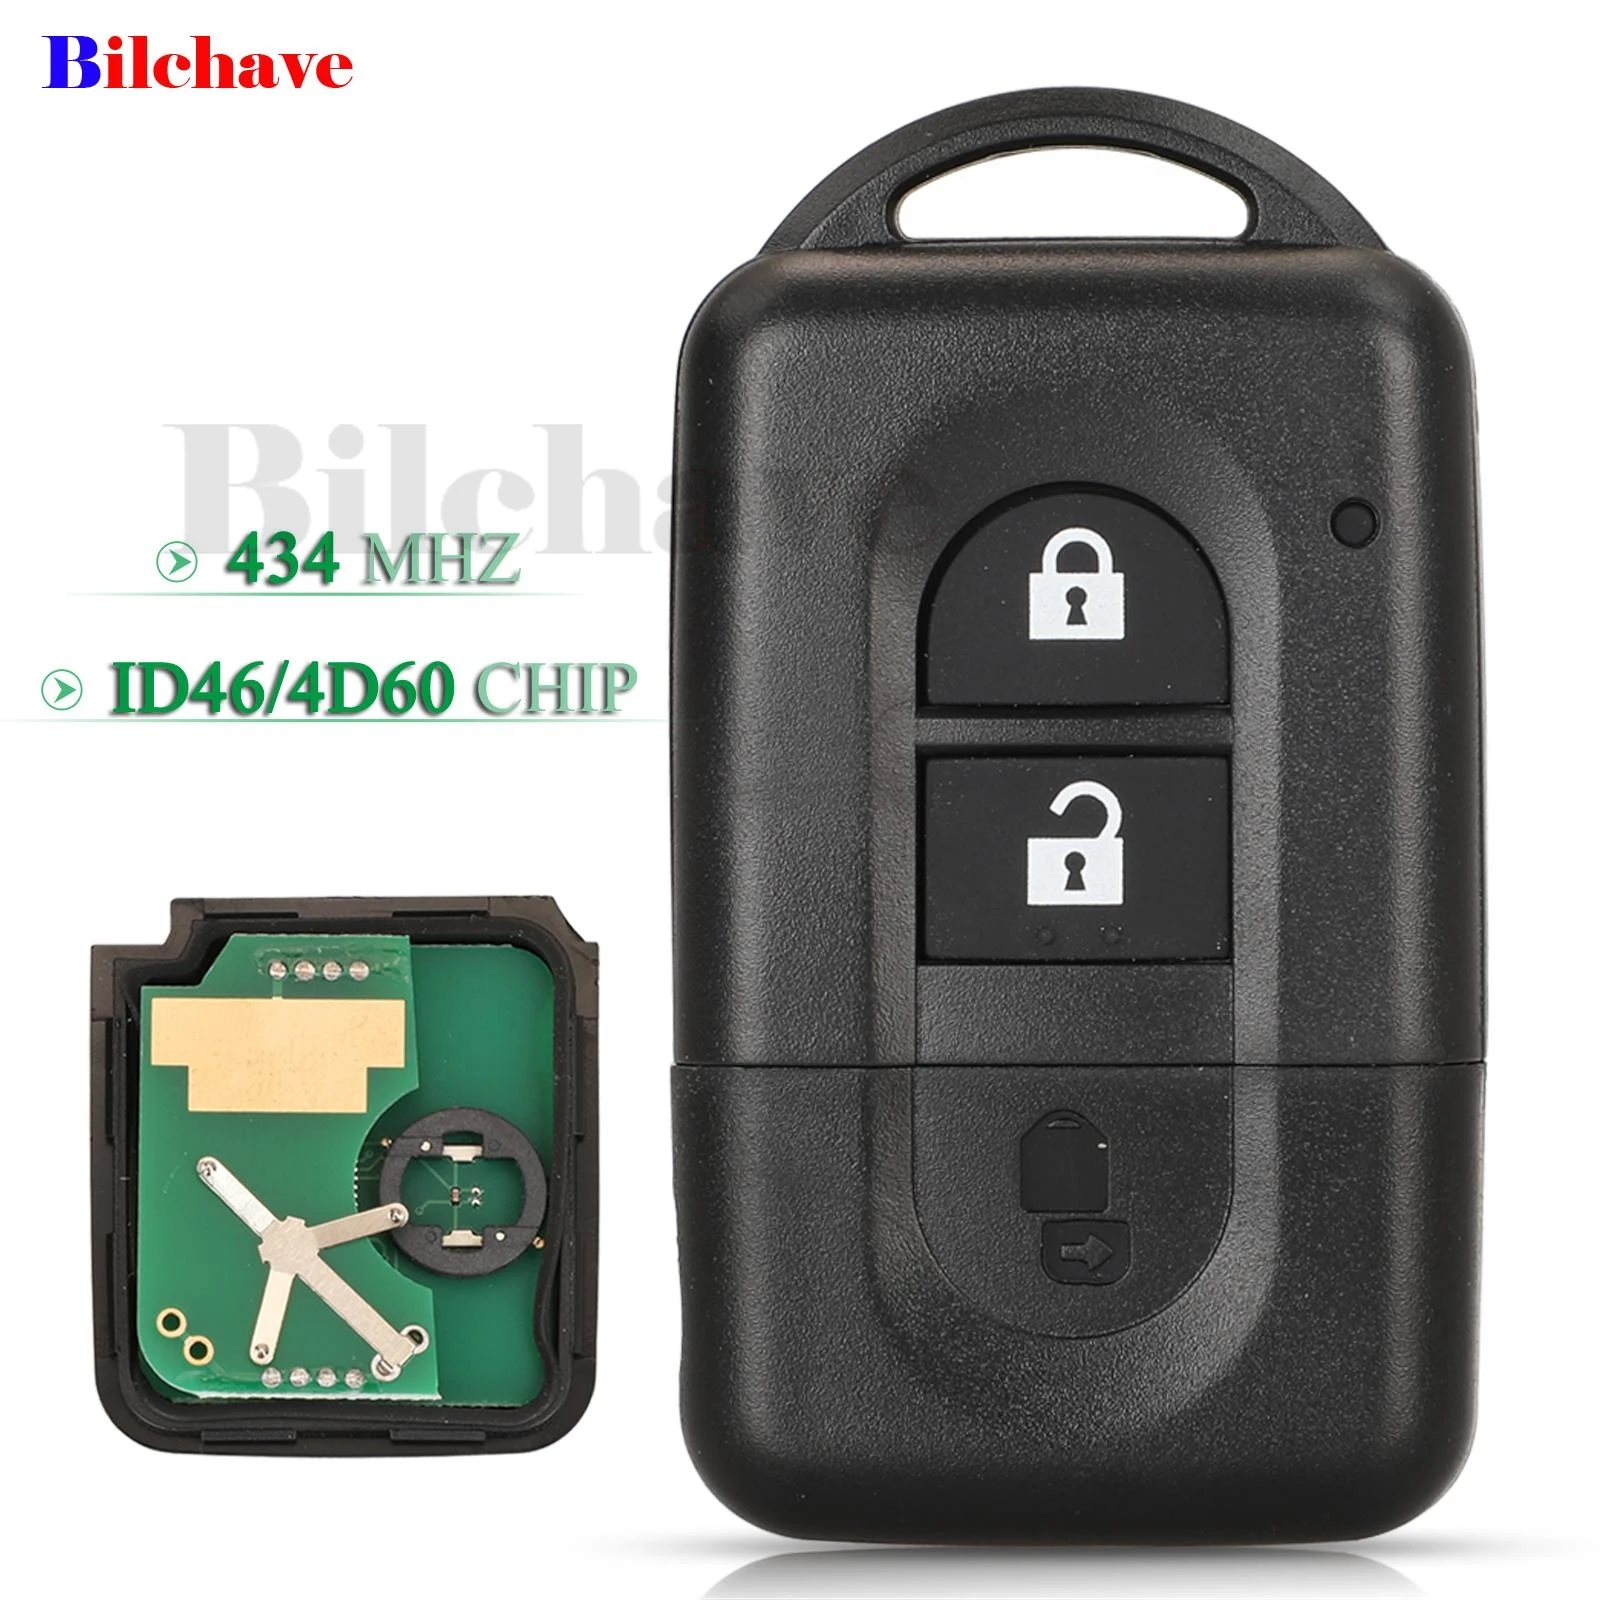 

jingyuqin 2 Buttons For Nissan Micra X-trail Qashqai Juke Duke Pathfinder Fob Remote Smart Car Key 434Mhz ID46 Chip Replacement